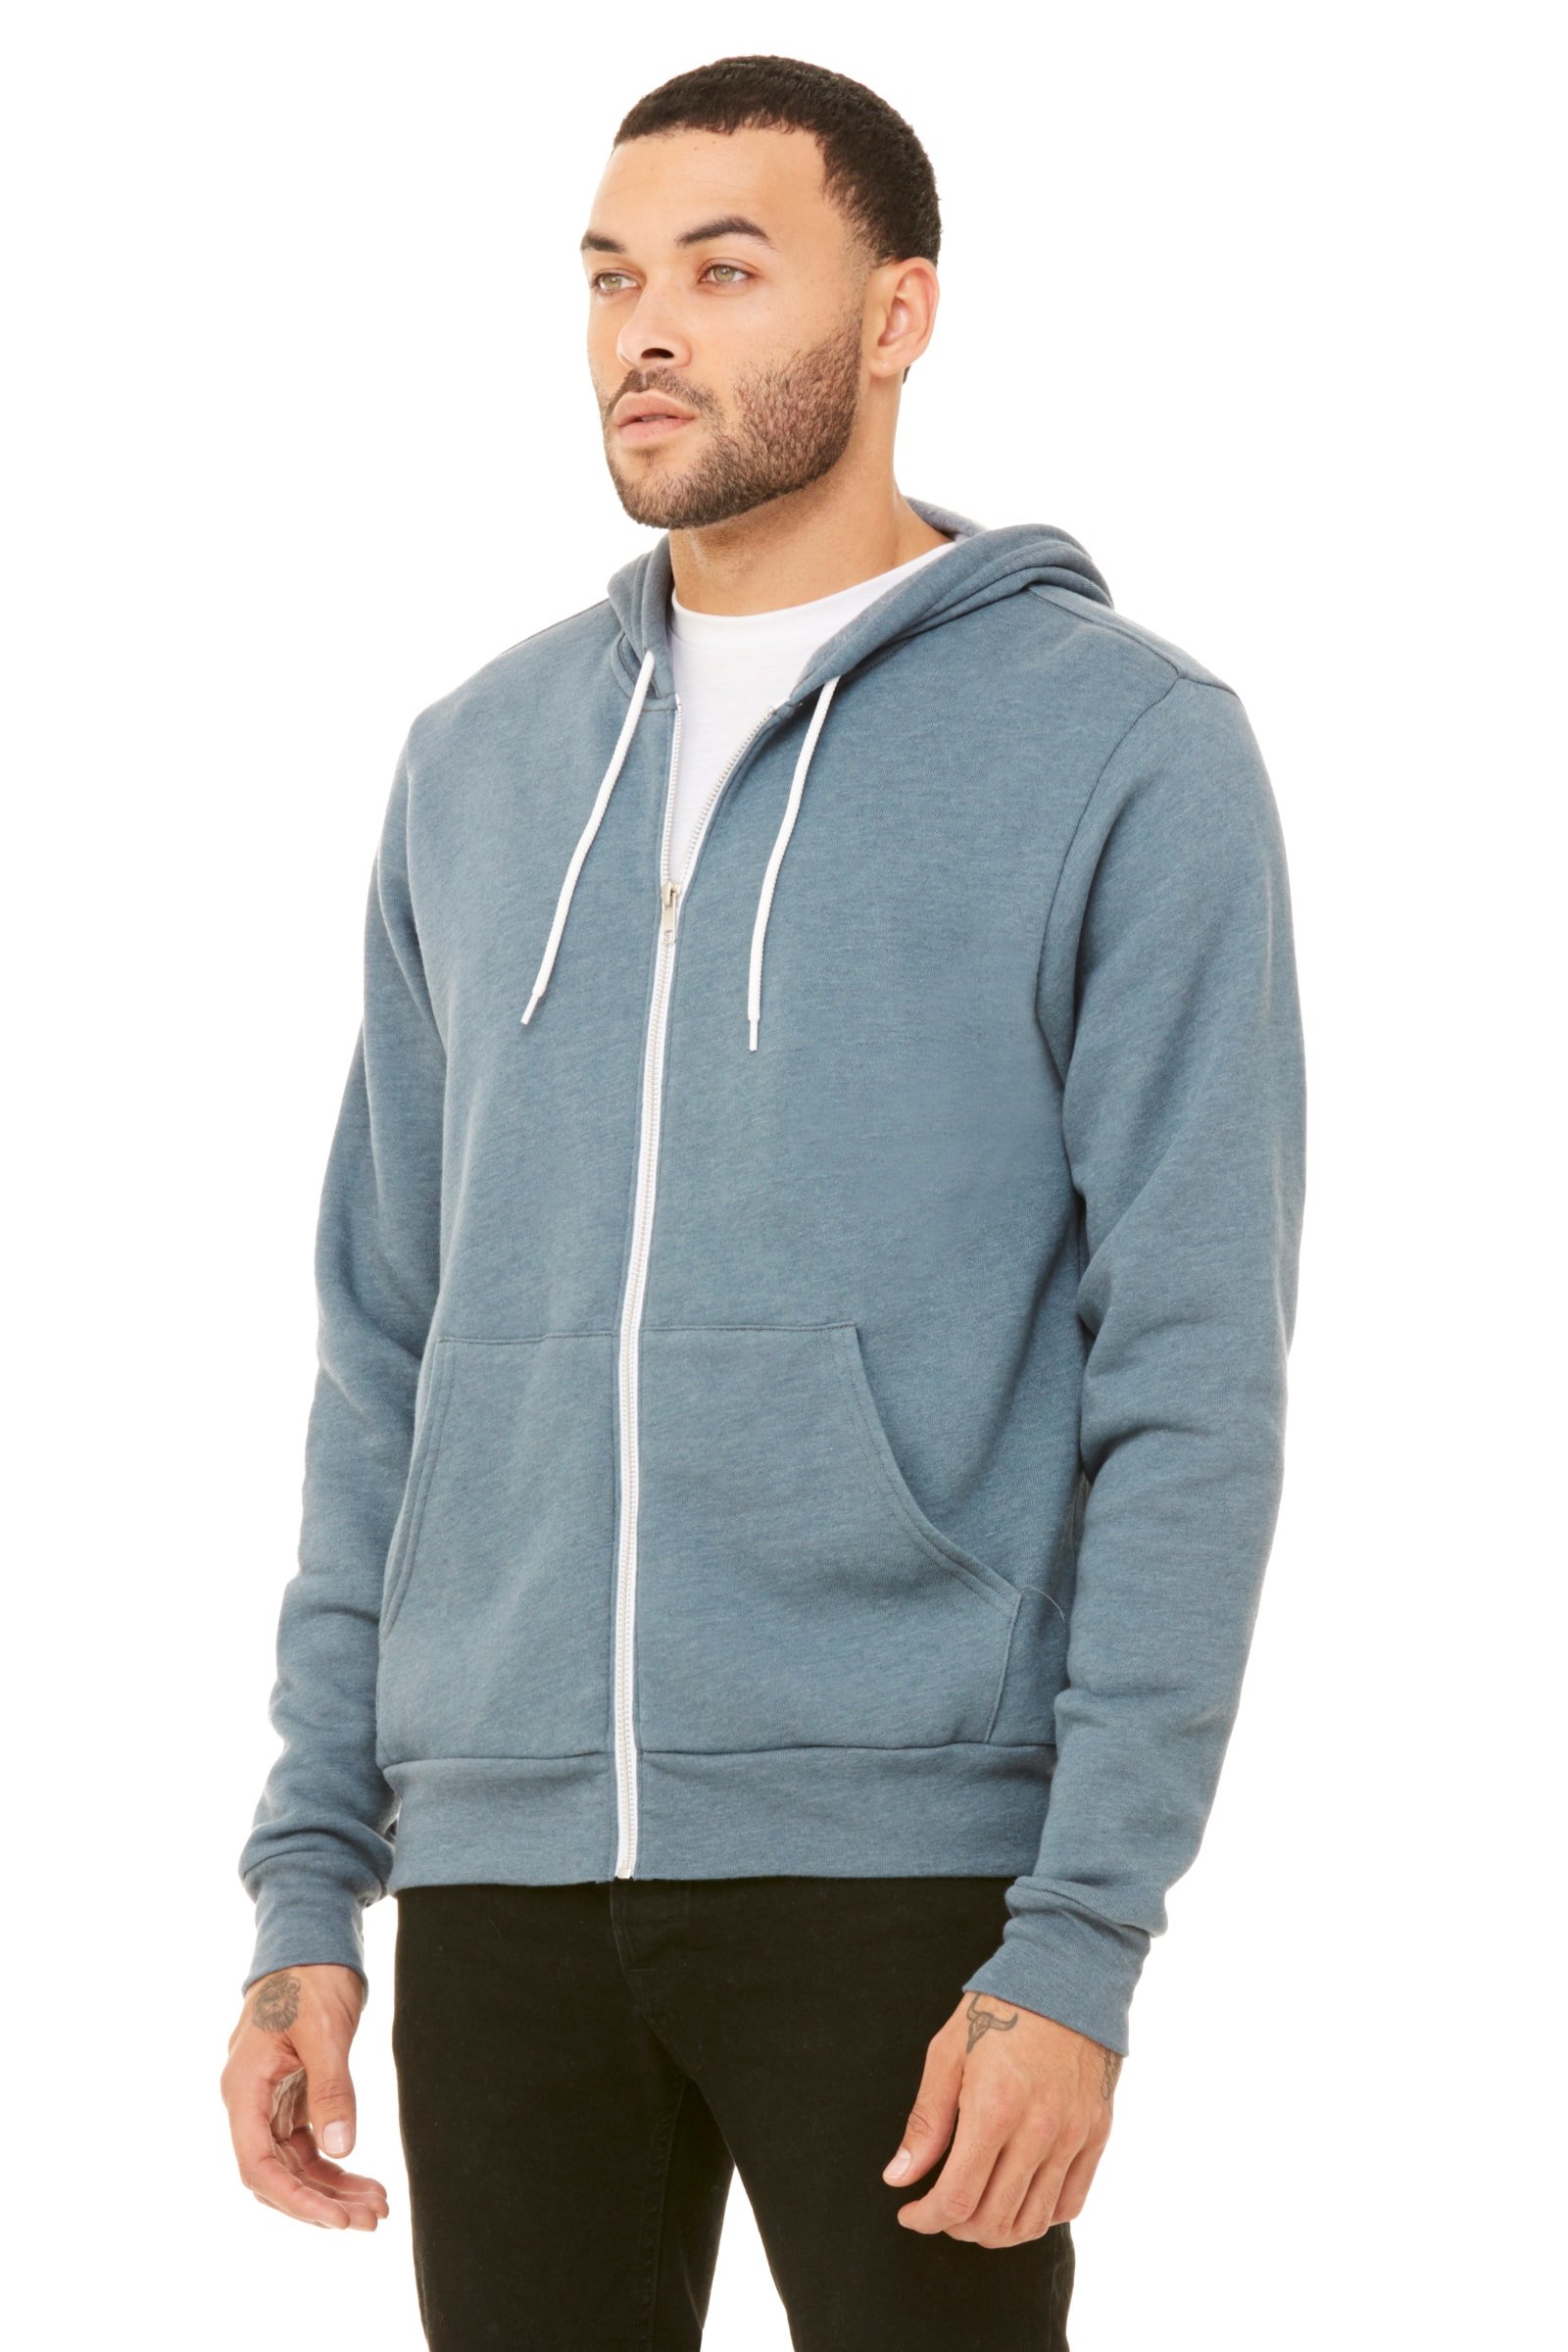 Independent Trading Co AFX90UNZ, Lightweight Full-Zip Hooded Sweatshirt ...